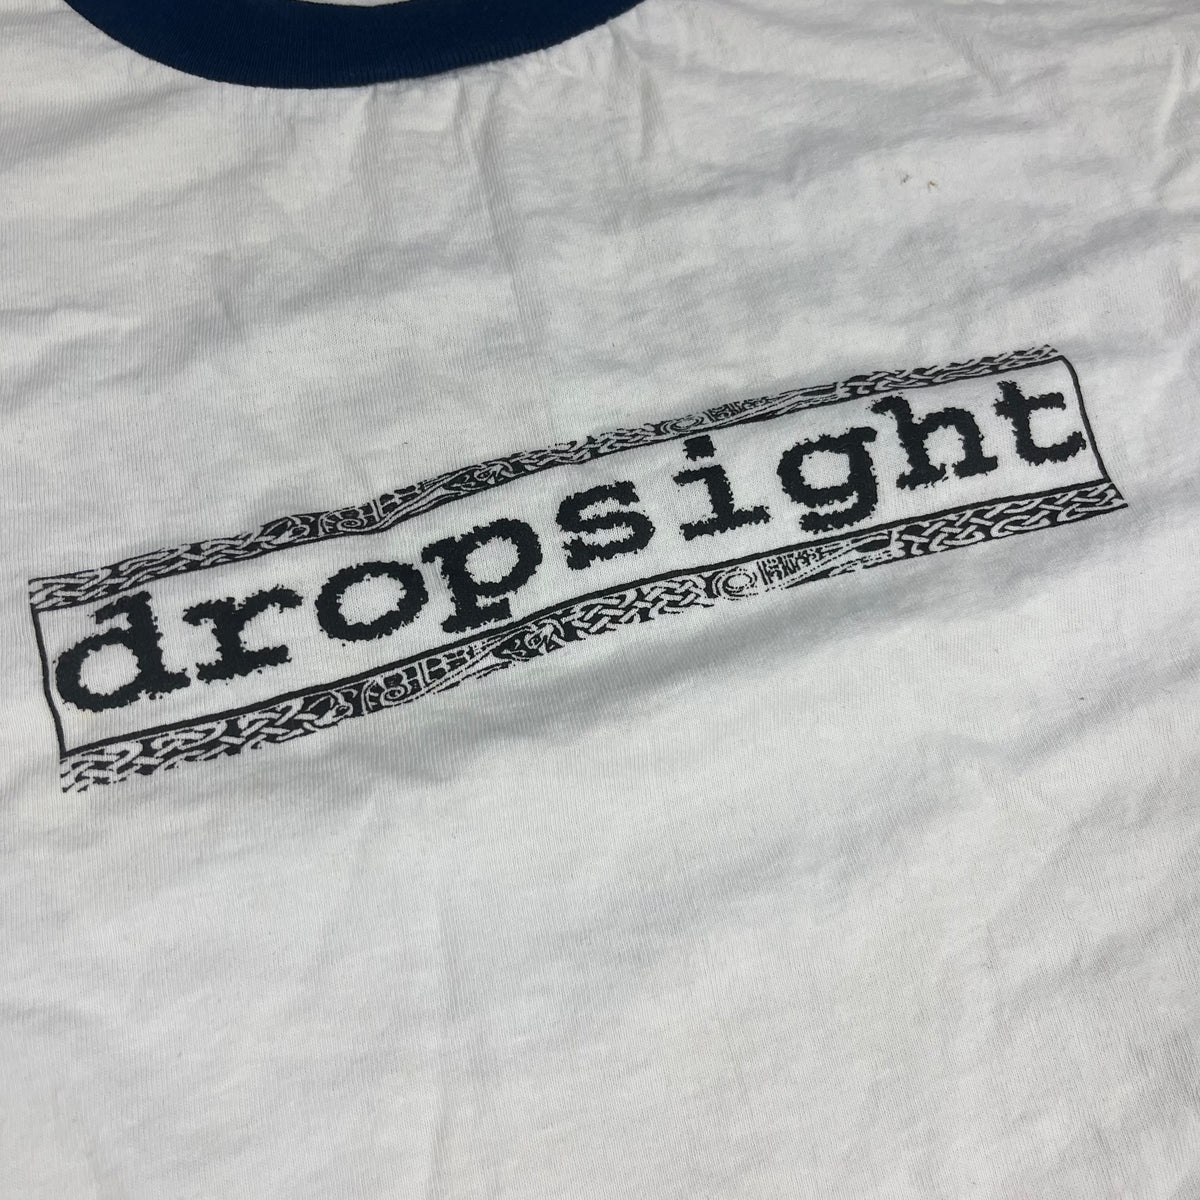 Vintage Dropsight &quot;New Jersey Hardcore&quot; Ringer Shirt